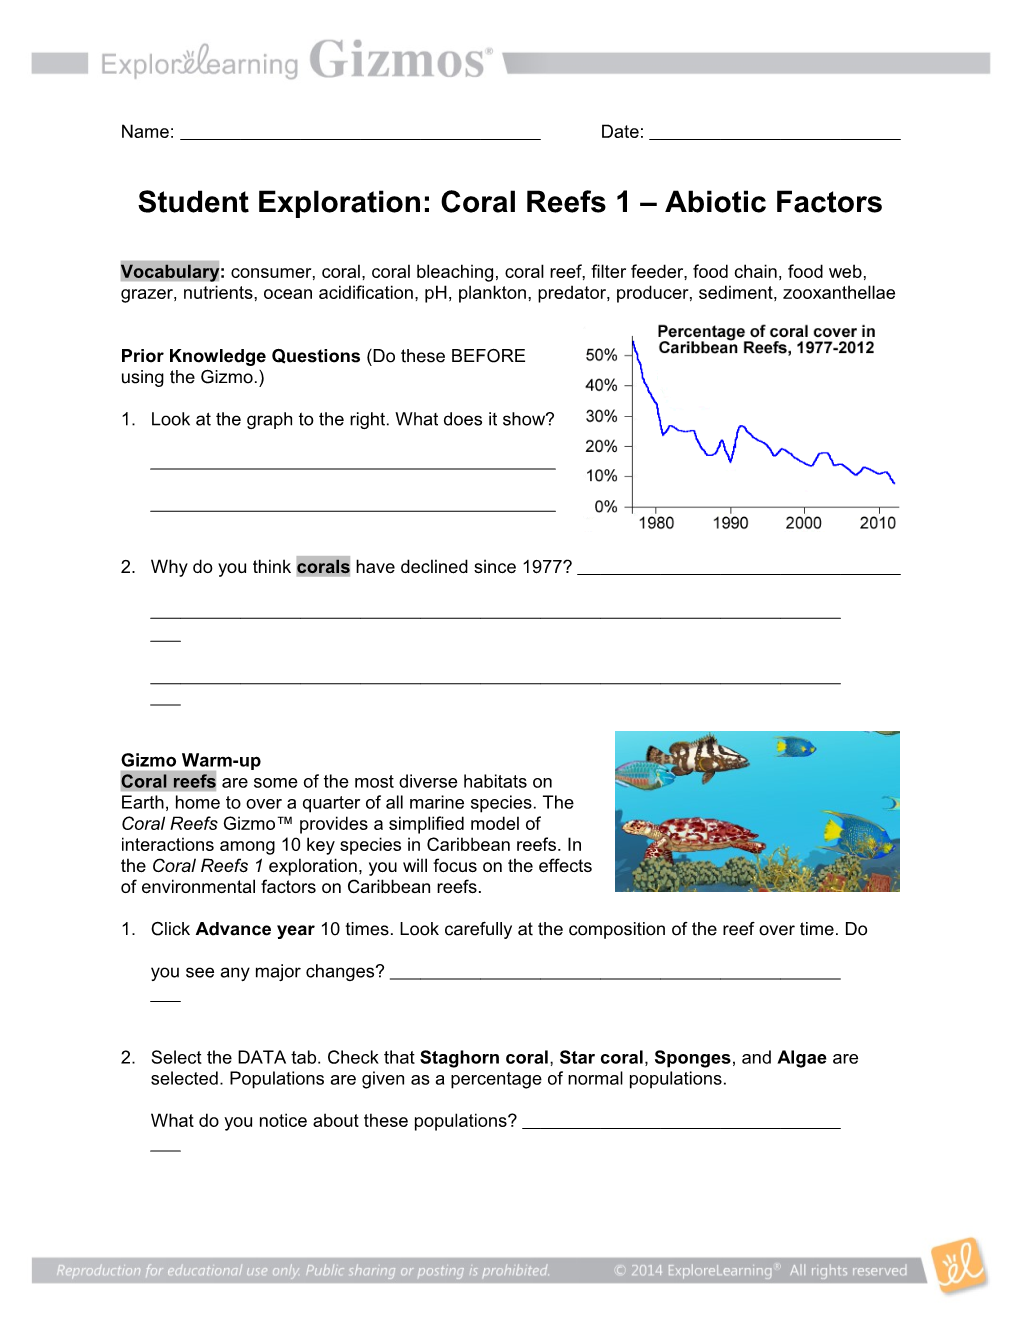 Student Exploration: Coral Reefs 1 Abiotic Factors